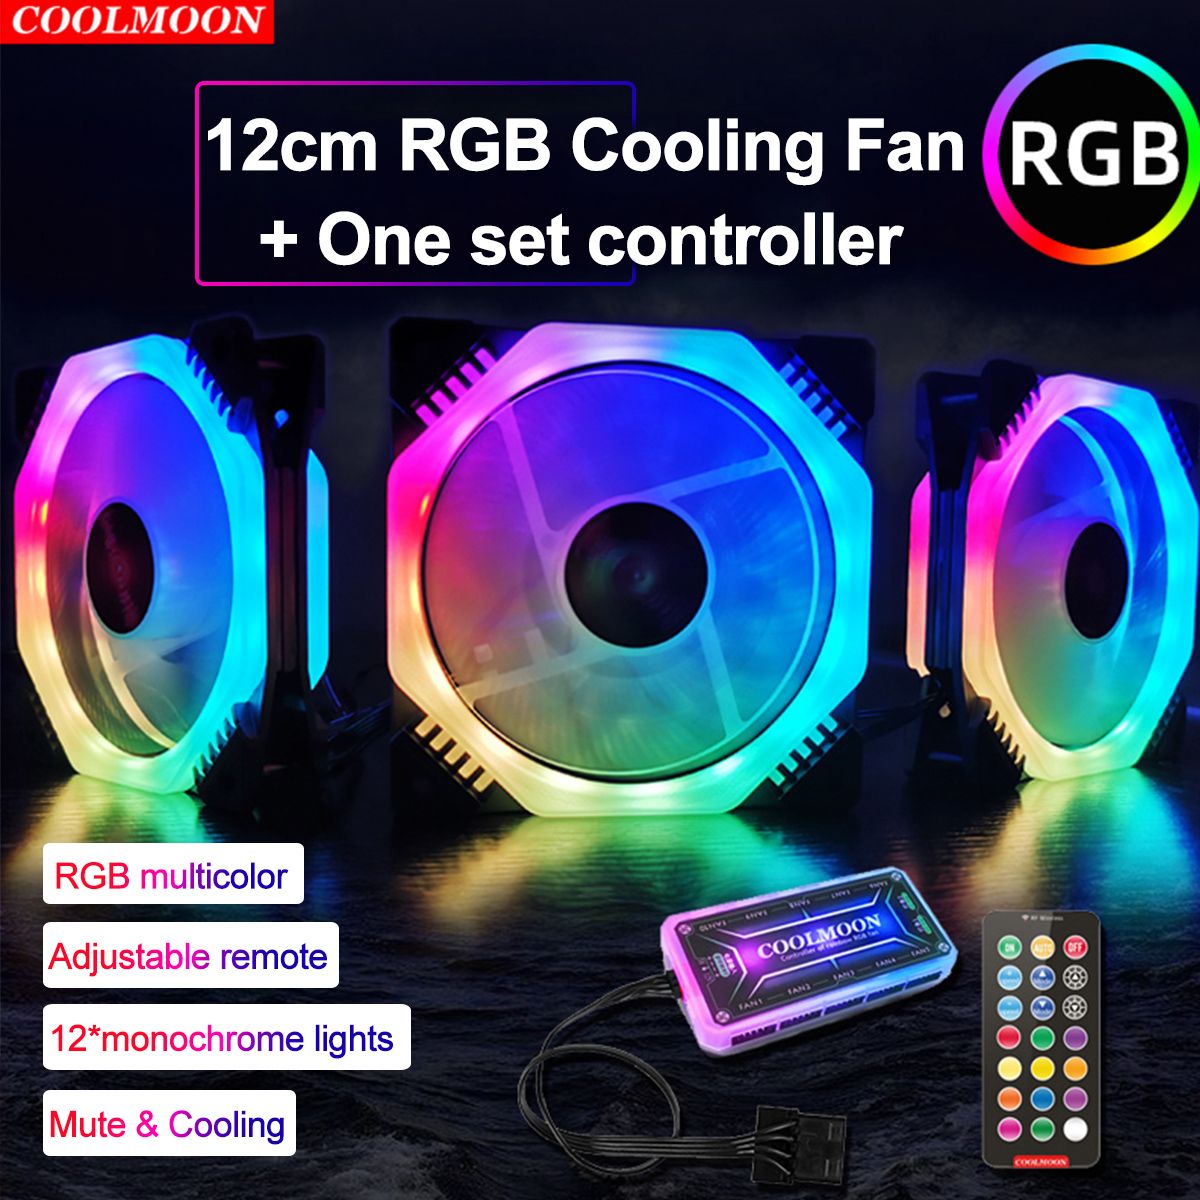 Computer-PC-Cooler-Cooling-Fan-RGB-LED-Multicolor-mode-12cm-Quiet-Chassis-Fan-1634936